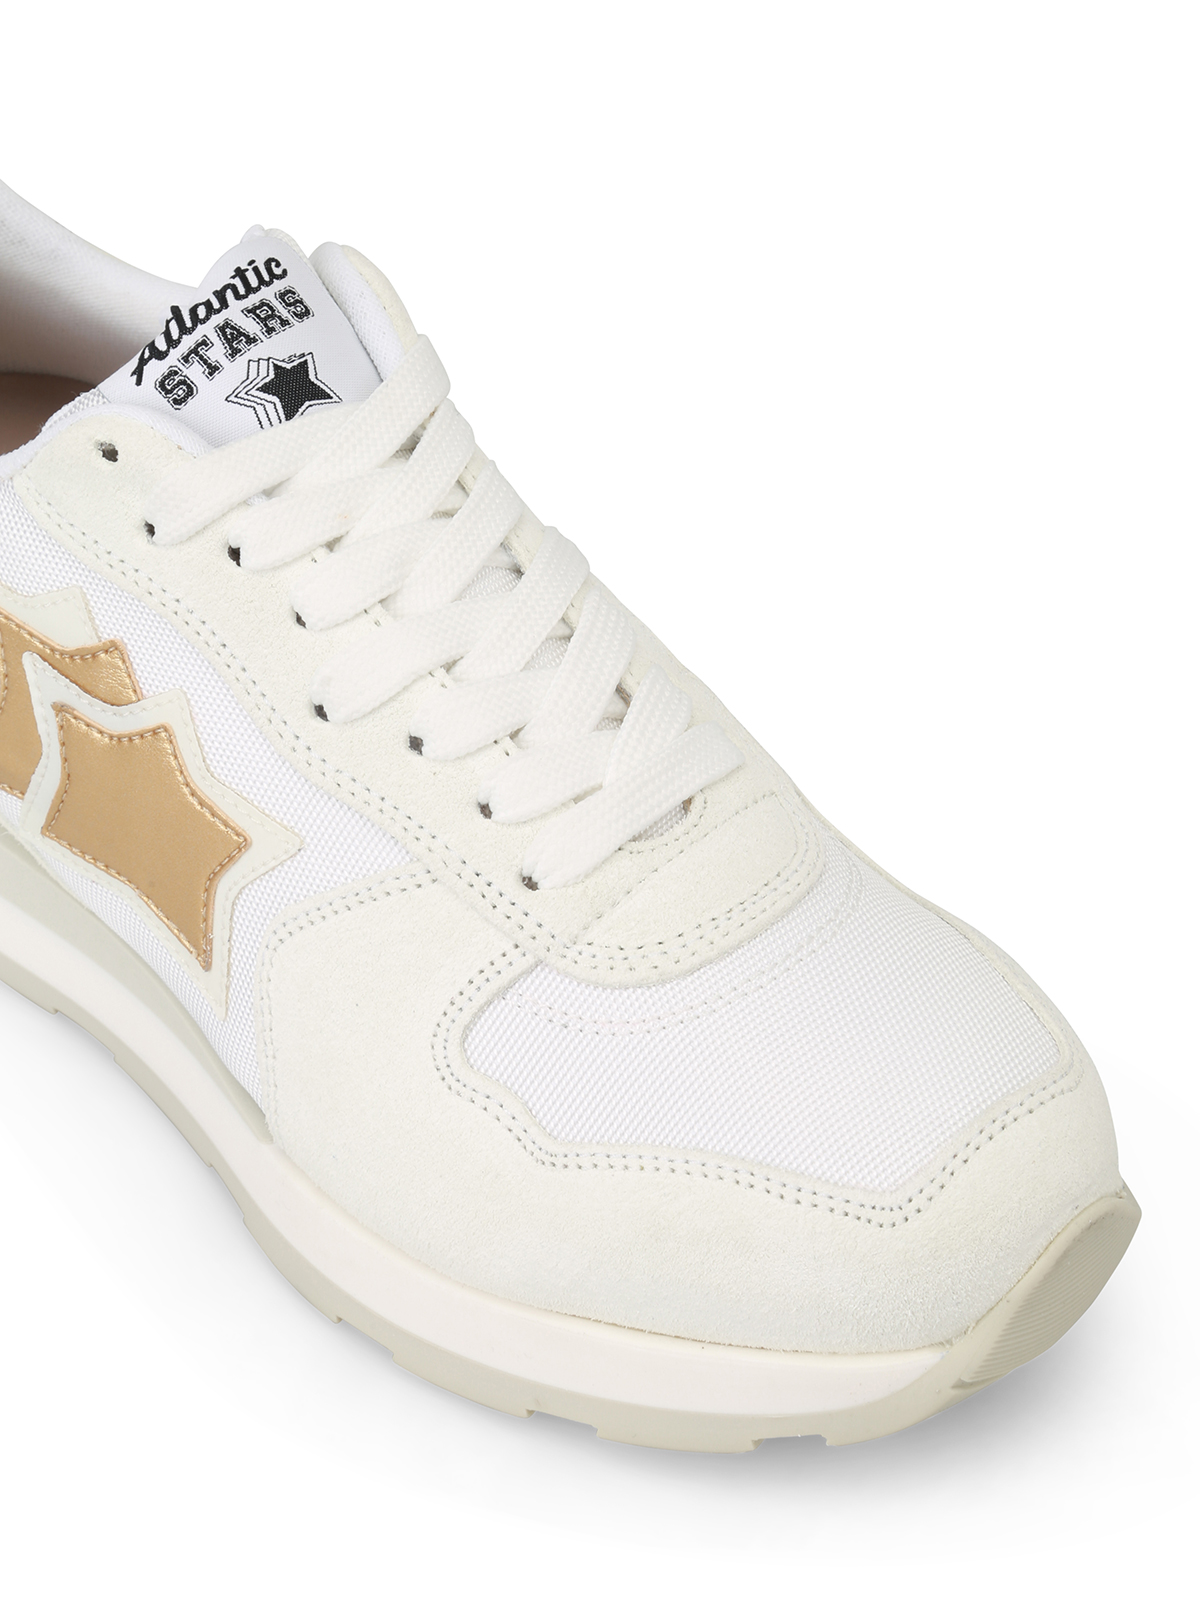 Trainers Atlantic Stars - Vega white and gold sneakers - VEGABO86B